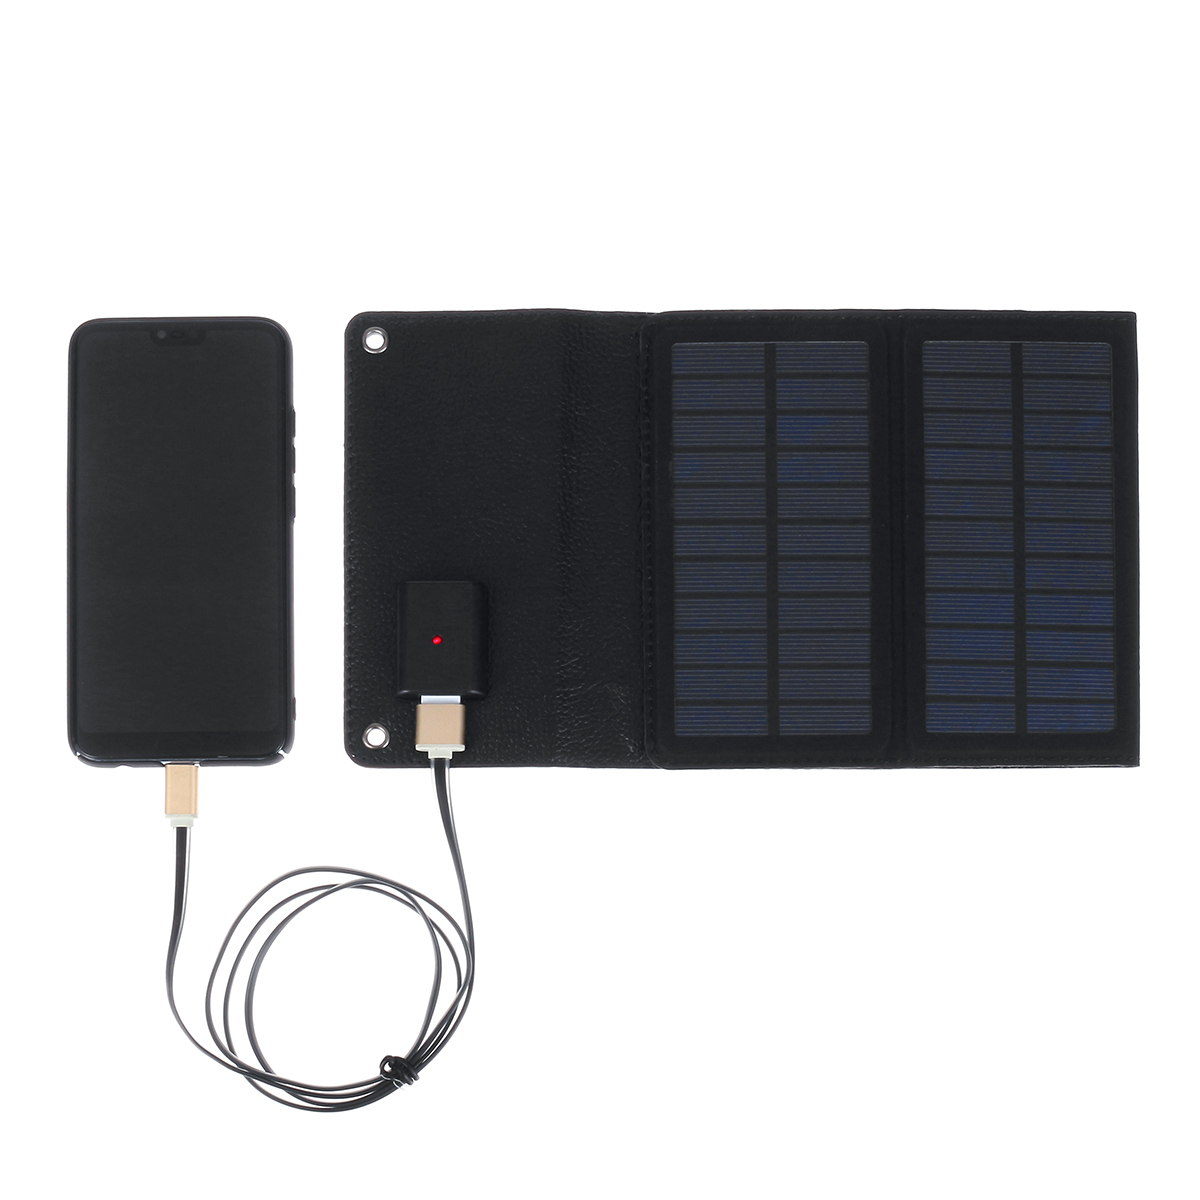 7W 5V Waterproof Foldable Mono-crystalline Silicon Solar Panel With LED Charging indicator & USB Interface 29